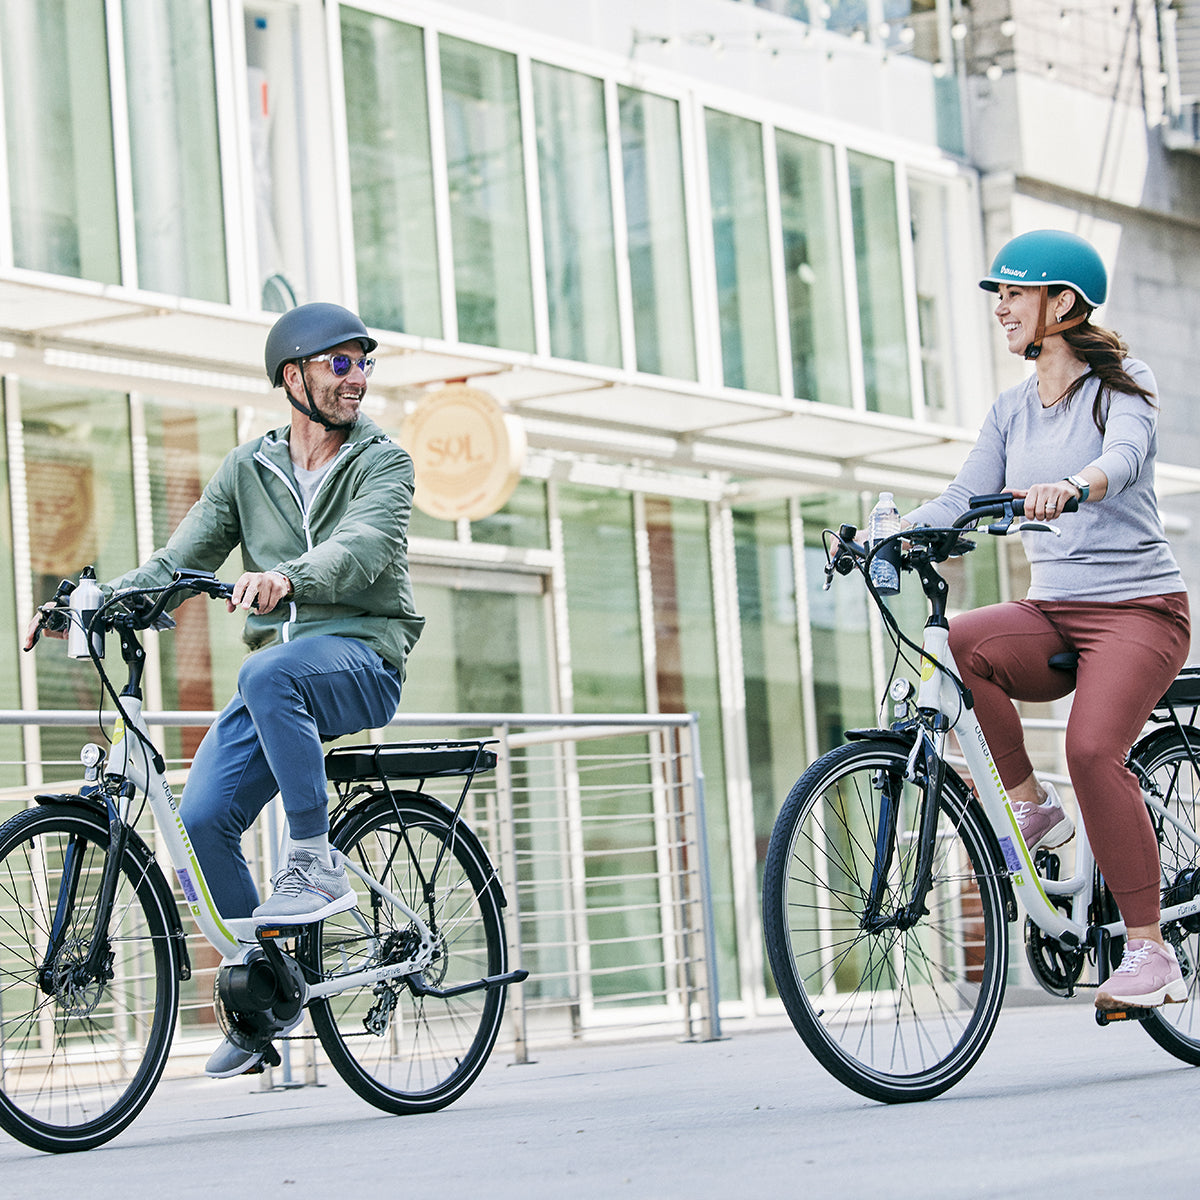 Riders enjoying e-bikes in city